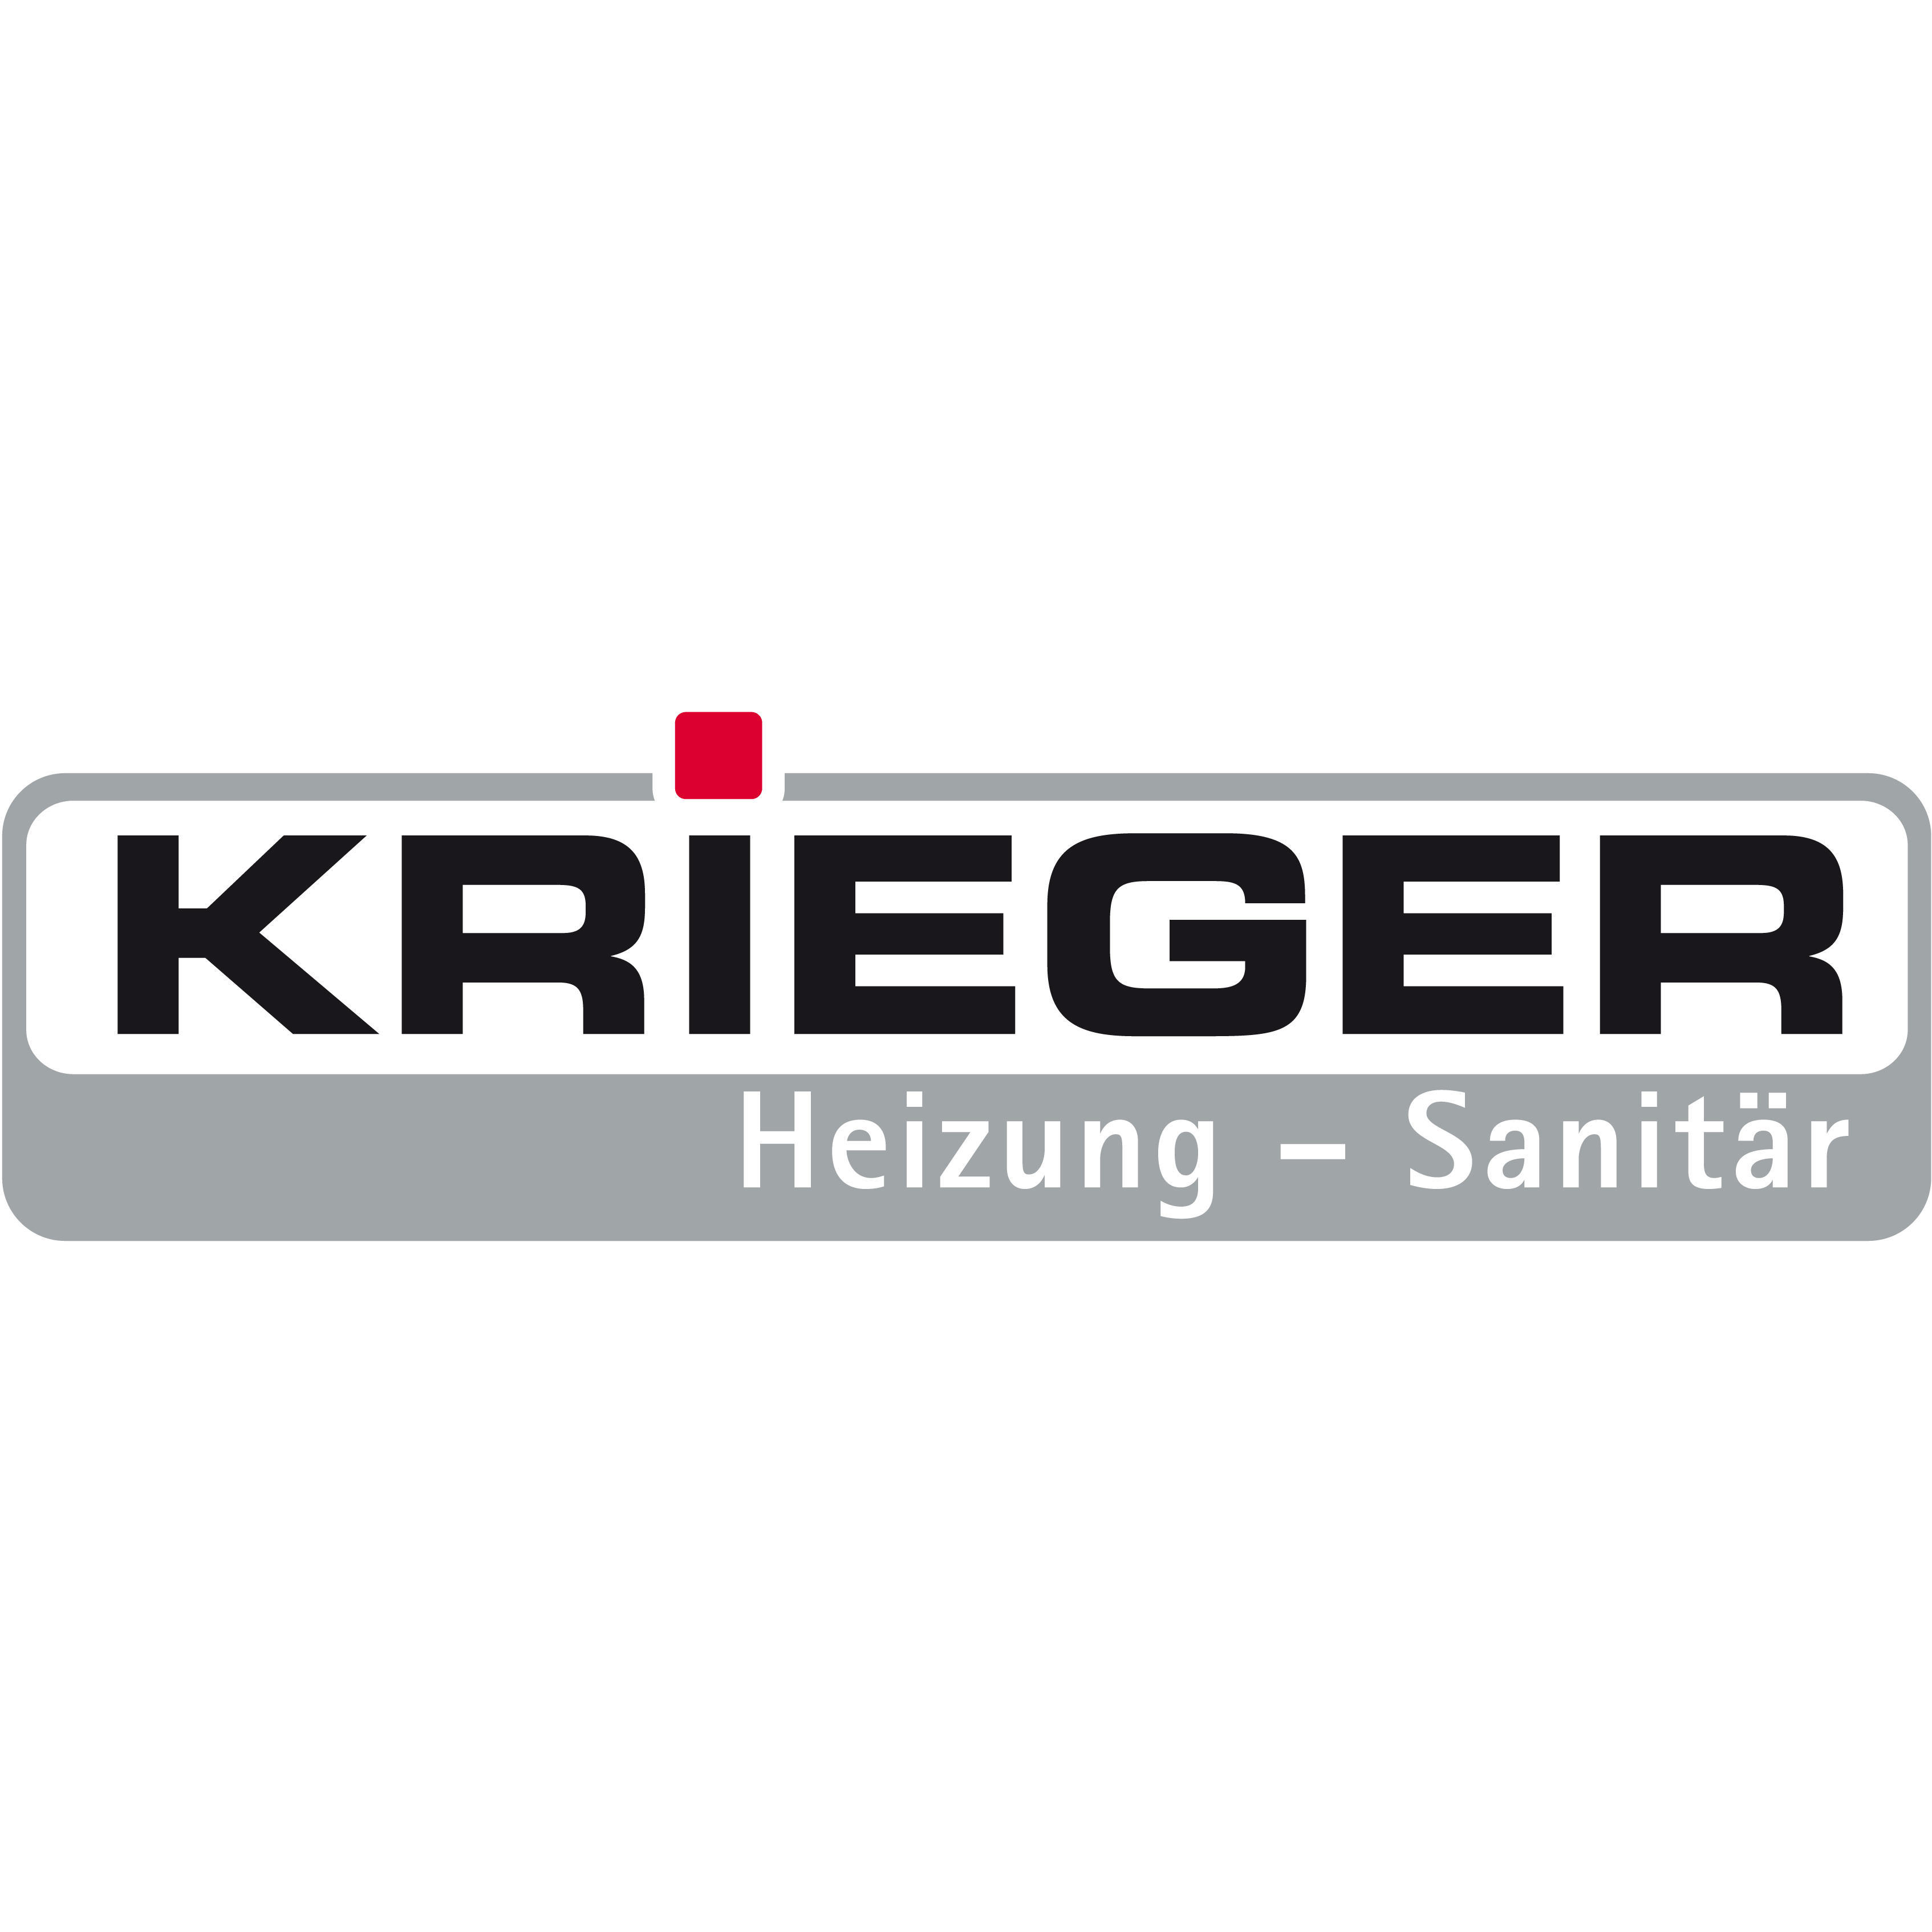 Krieger Heizung-Sanitär GmbH & Co. KG Logo